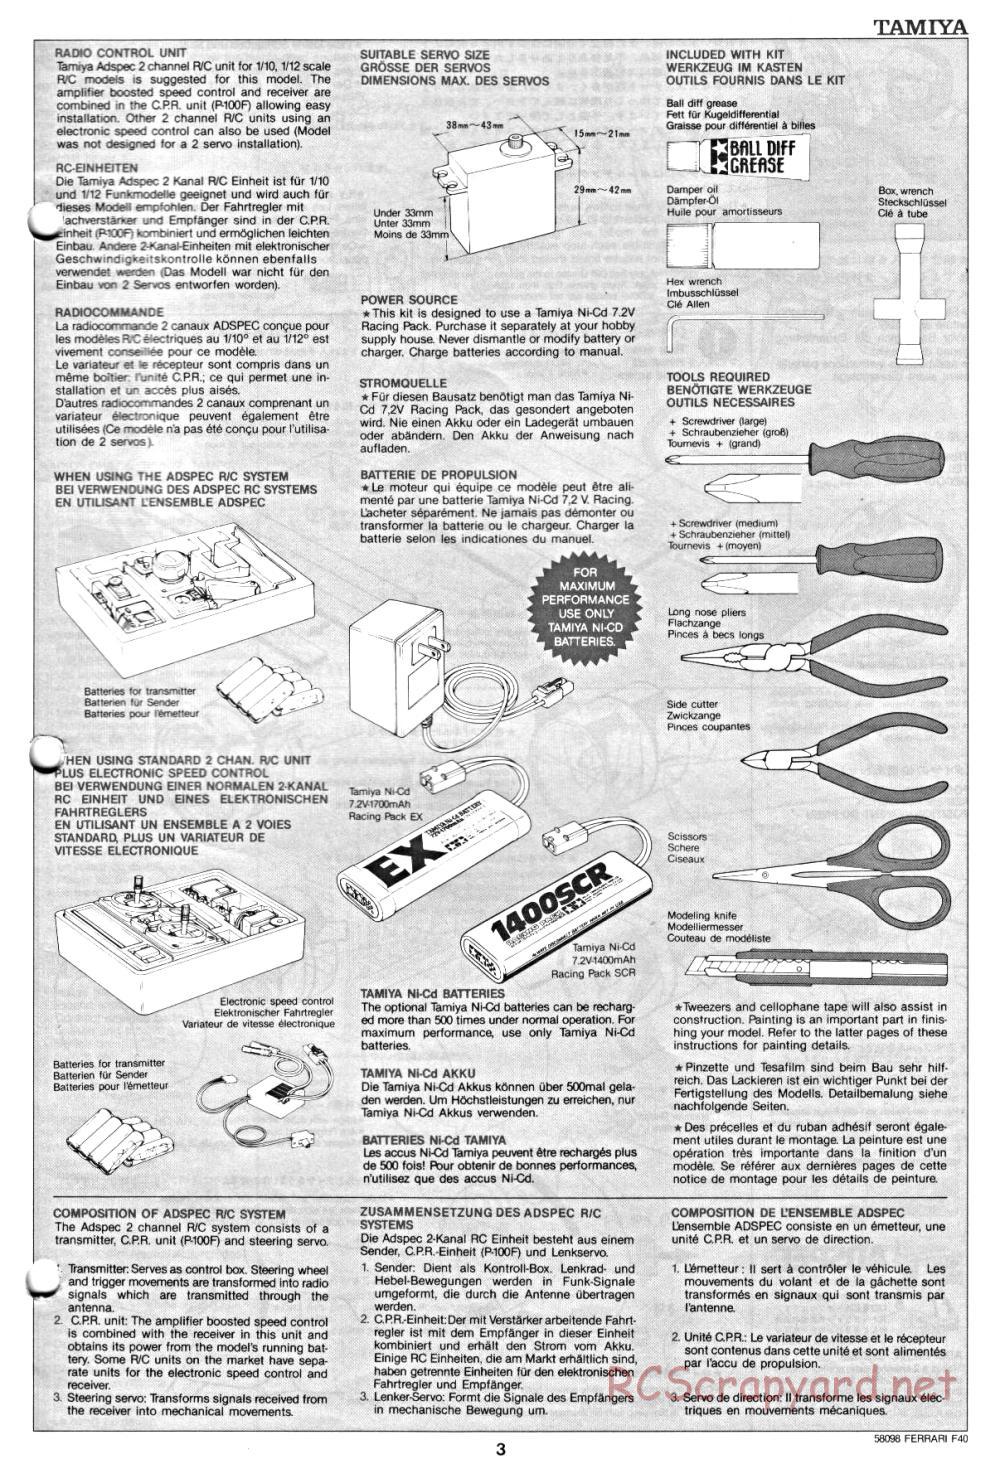 Tamiya - Ferrari F40 - 58098 - Manual - Page 3